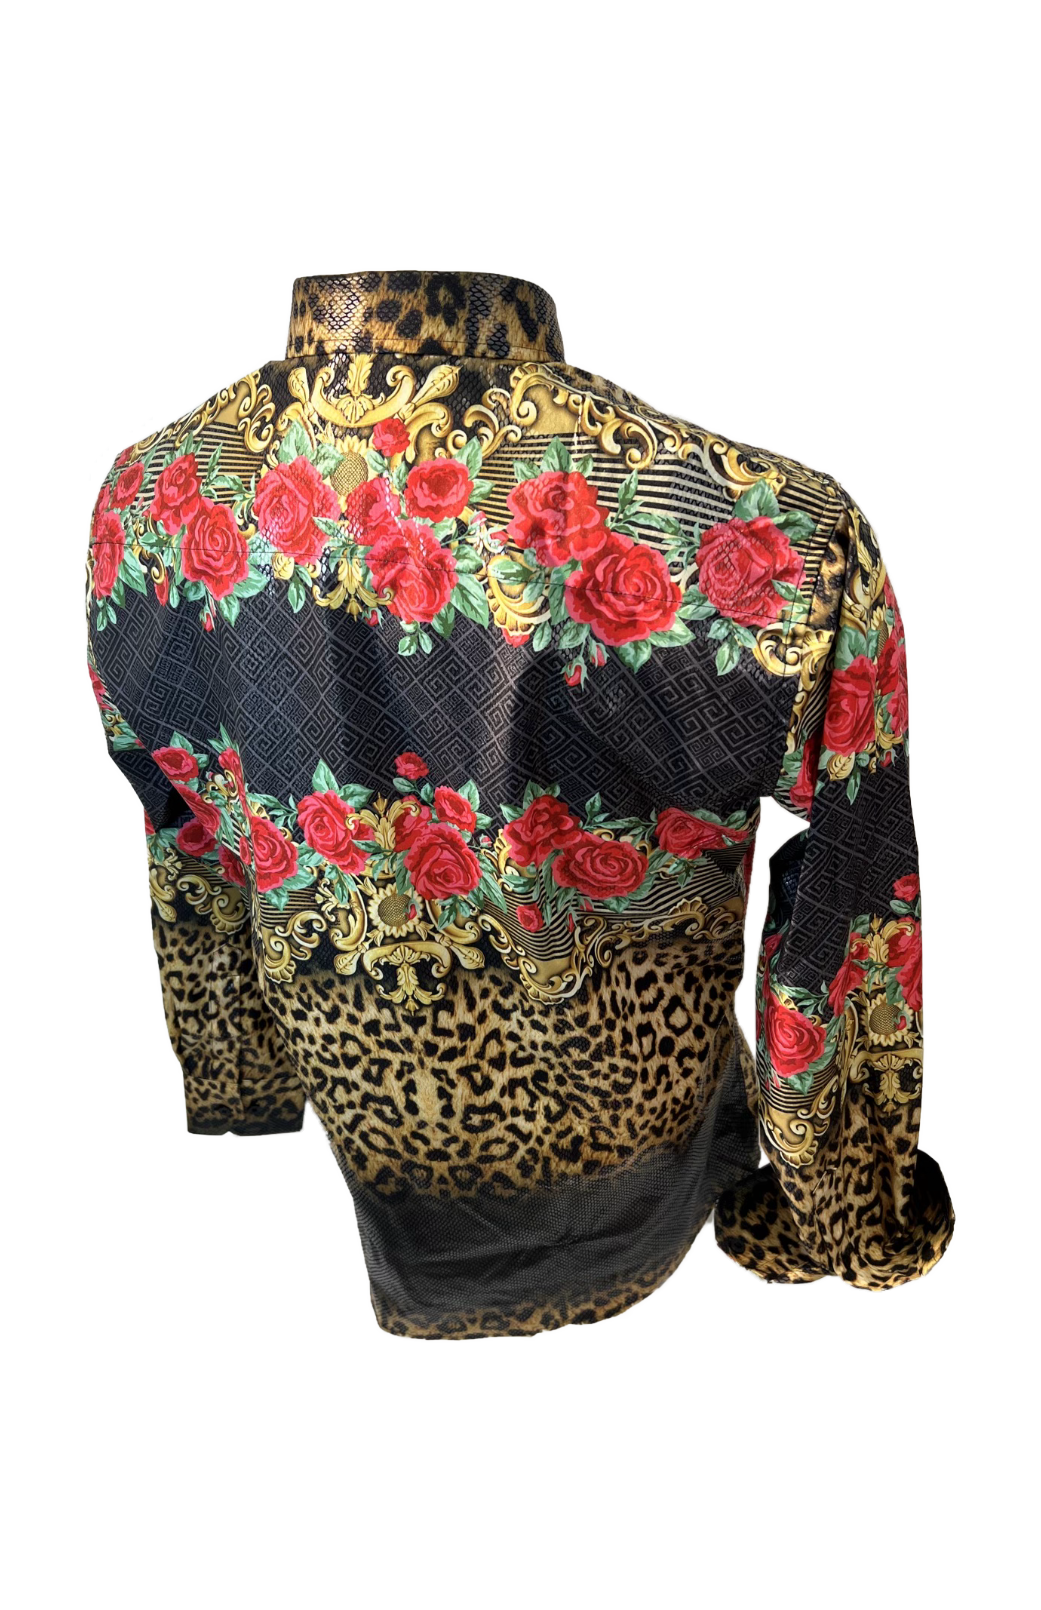 Men's Long Sleeve Button Down Dress Shirt Floral Rose Leopard Black Red Gold